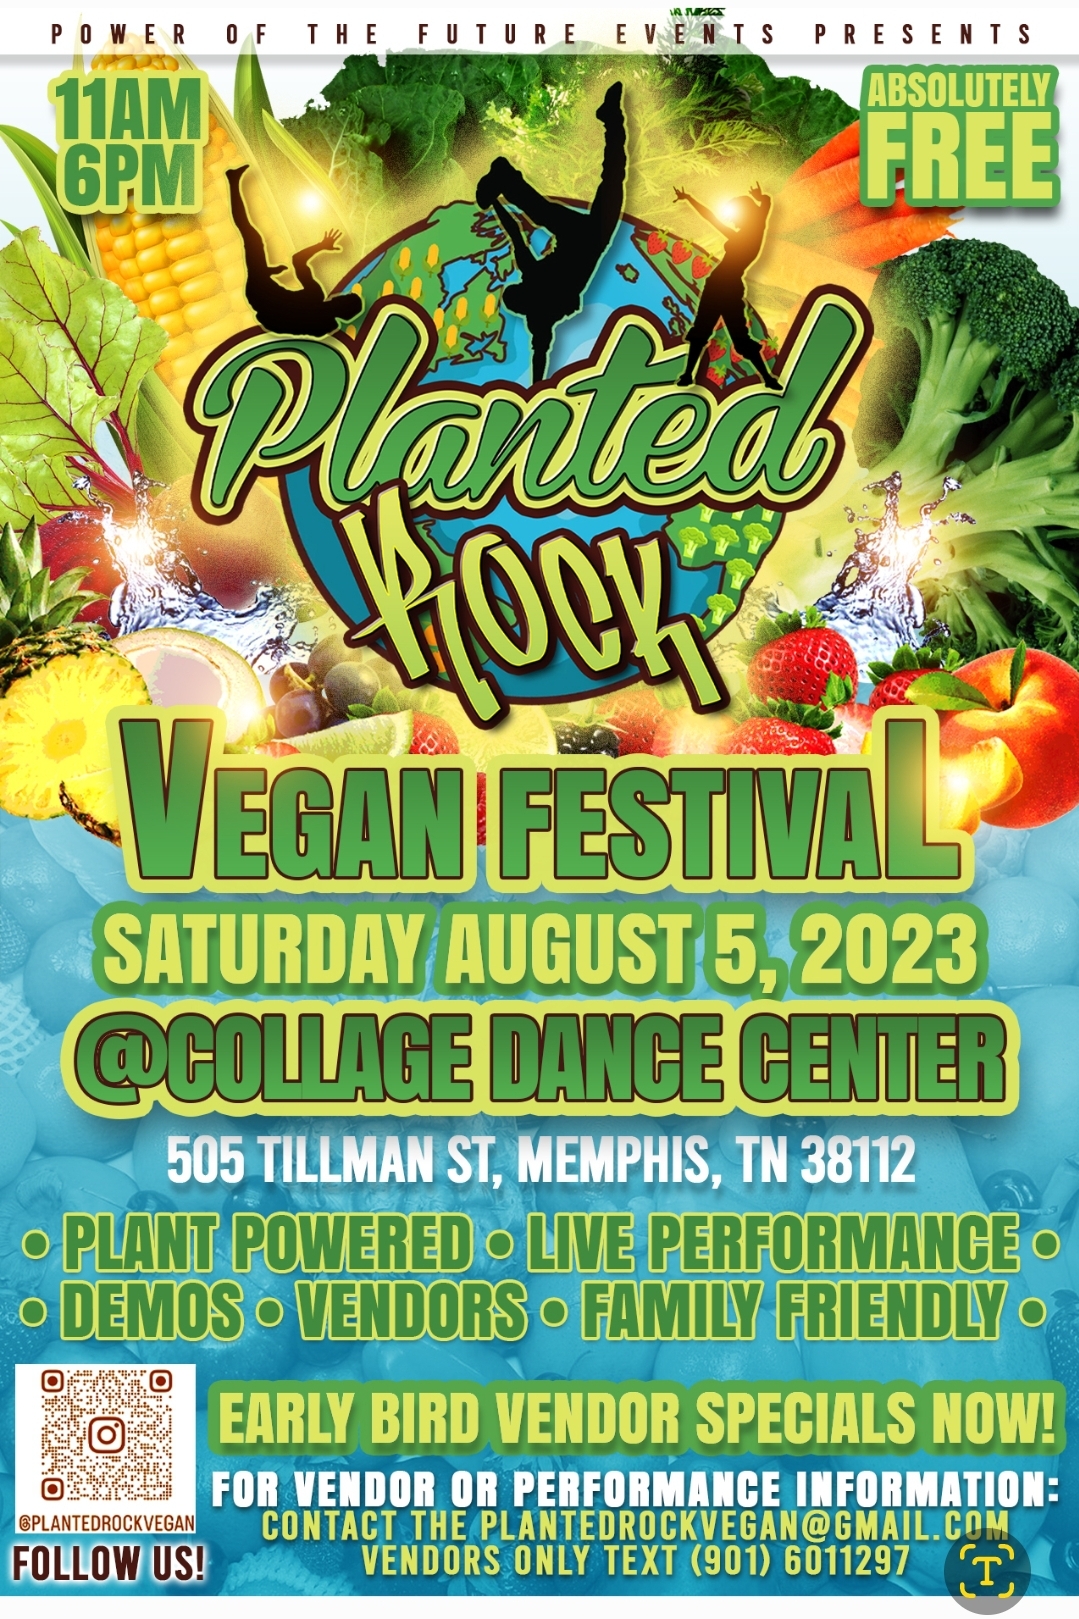 Planted Rock Vegan Festival